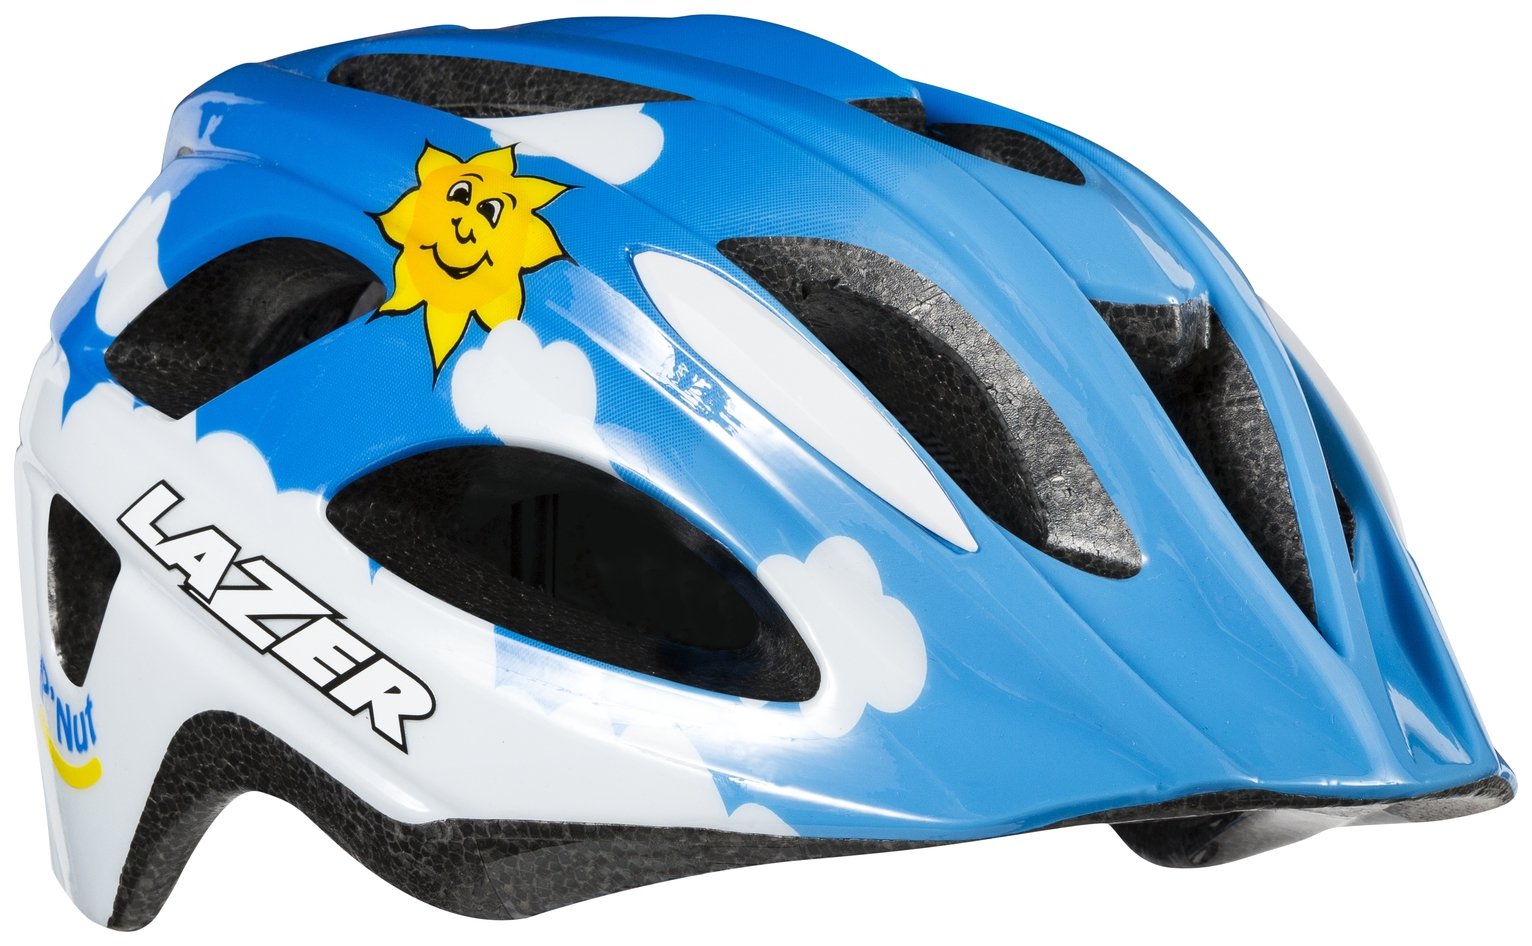 Lazer P Nut Bike Helmet review